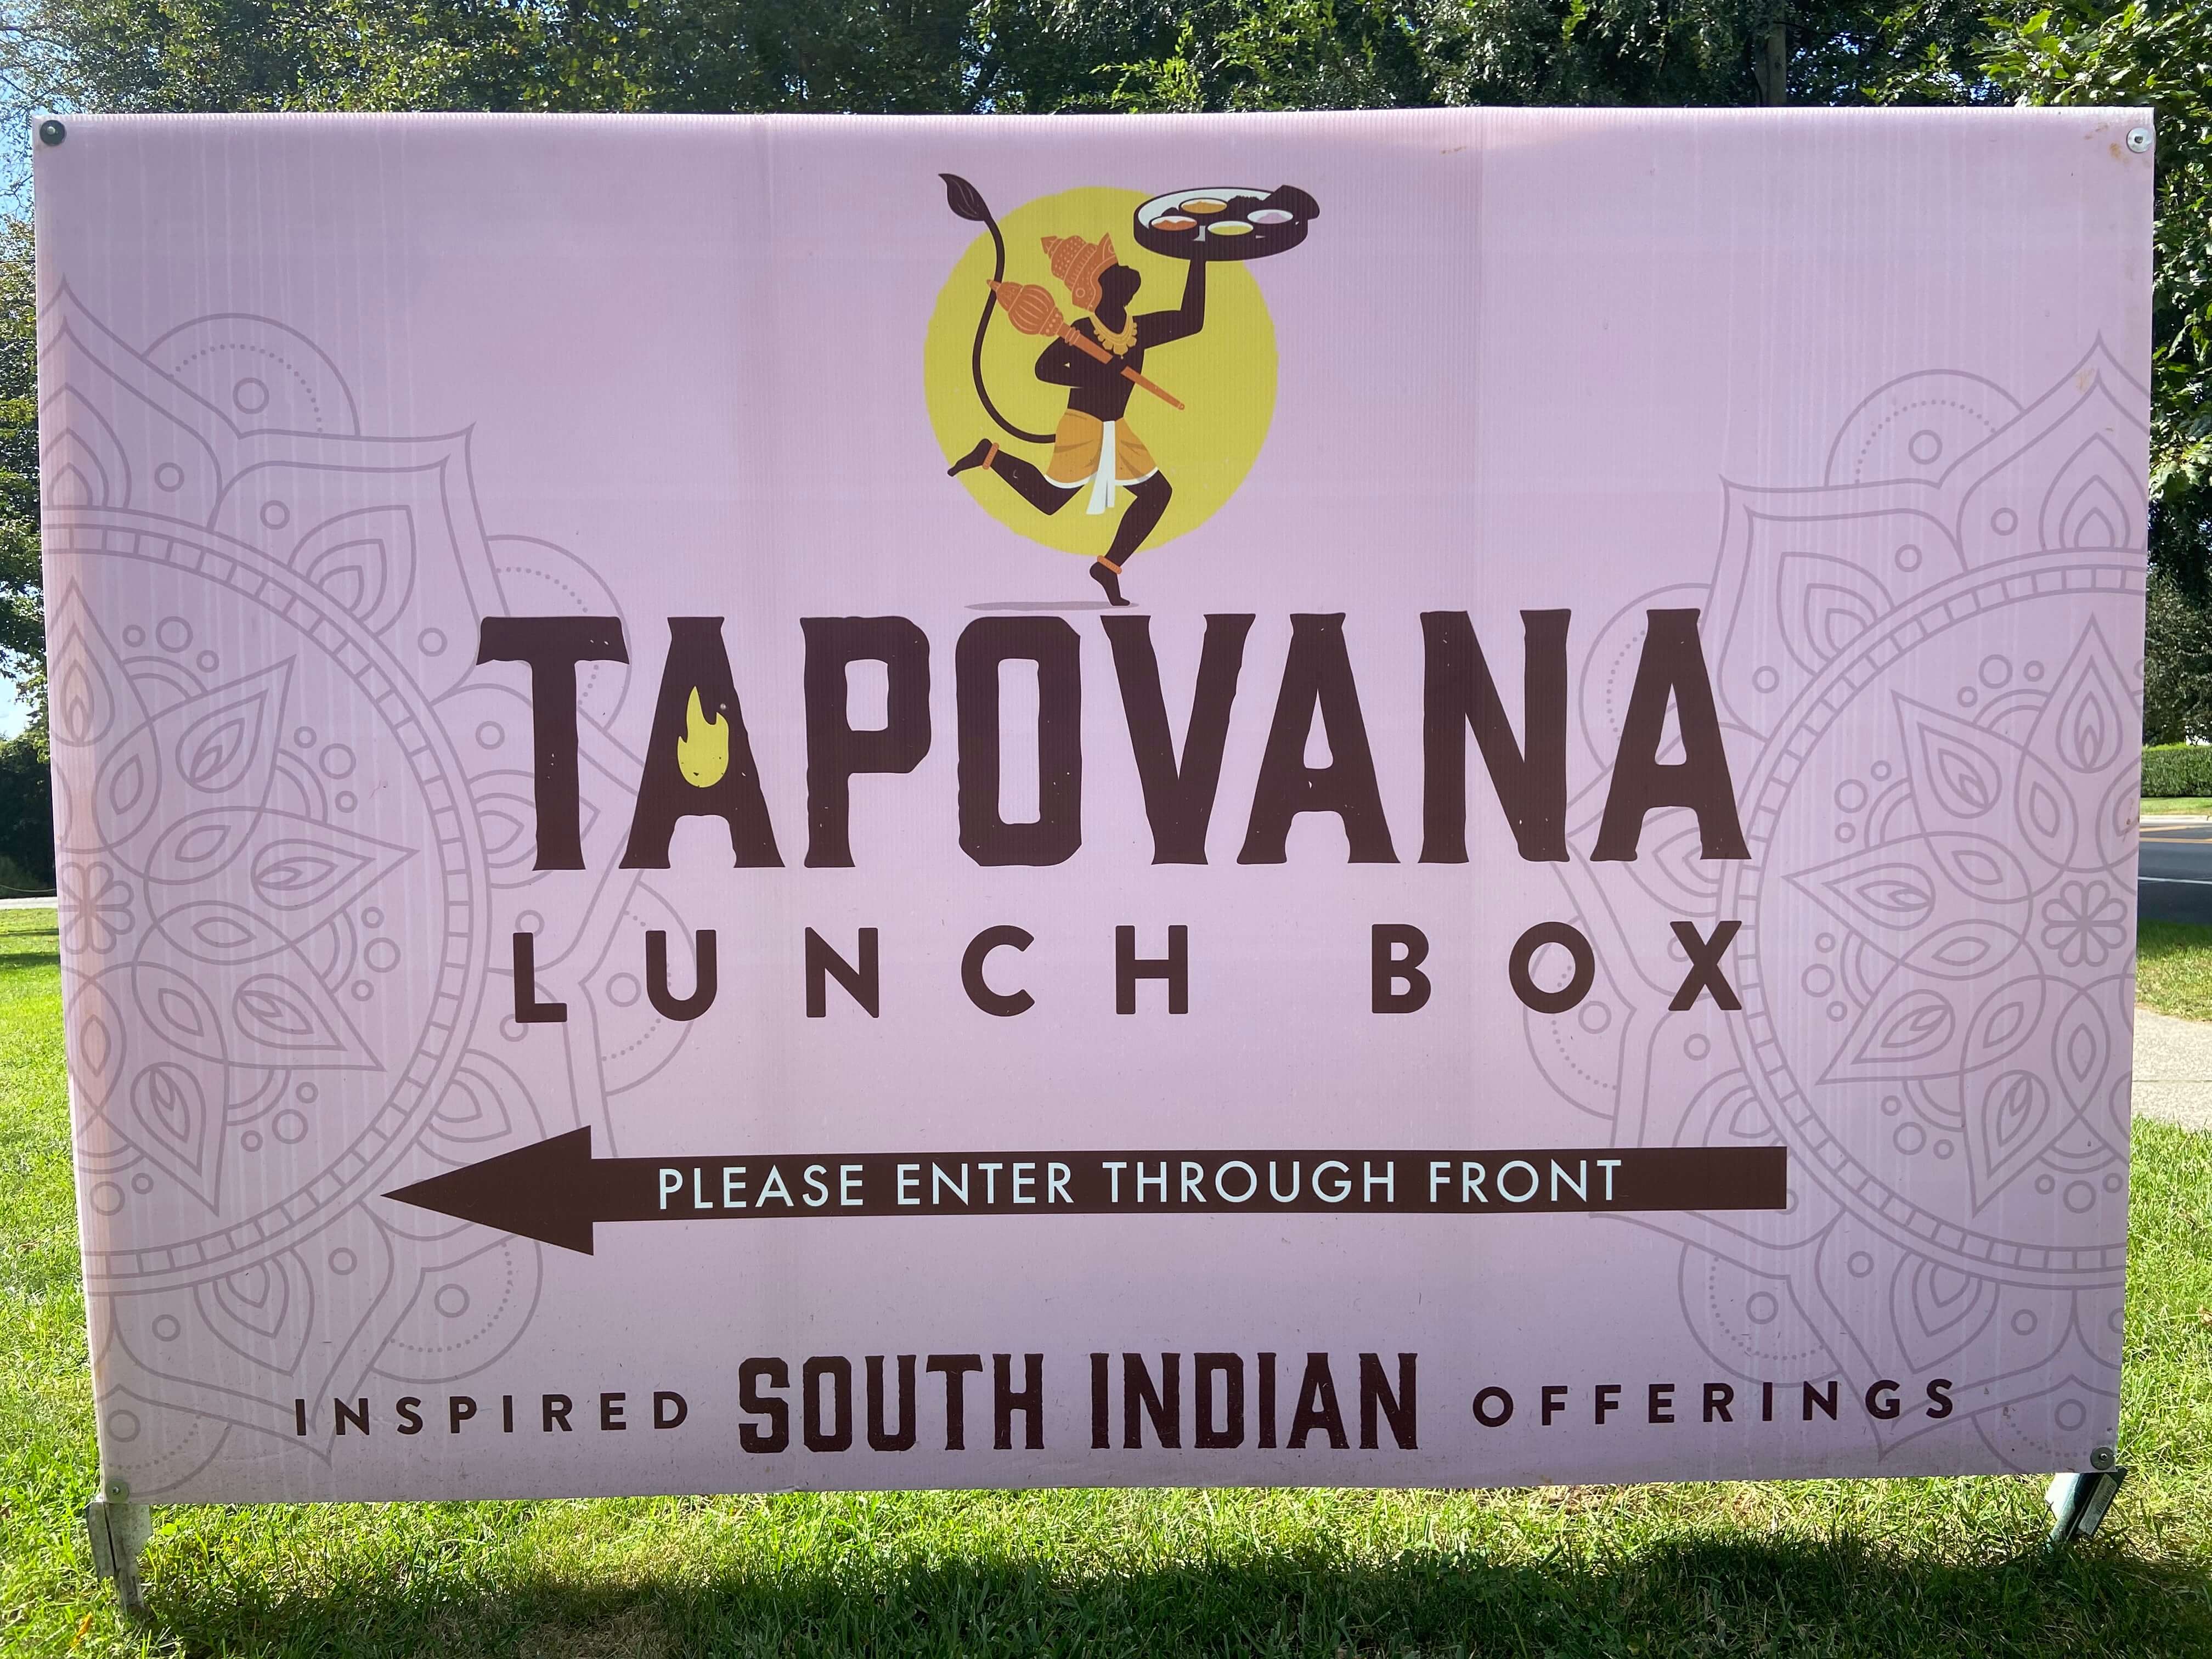 New signage outside the Bridgehampton Community House promoting Tapovana Lunch Box